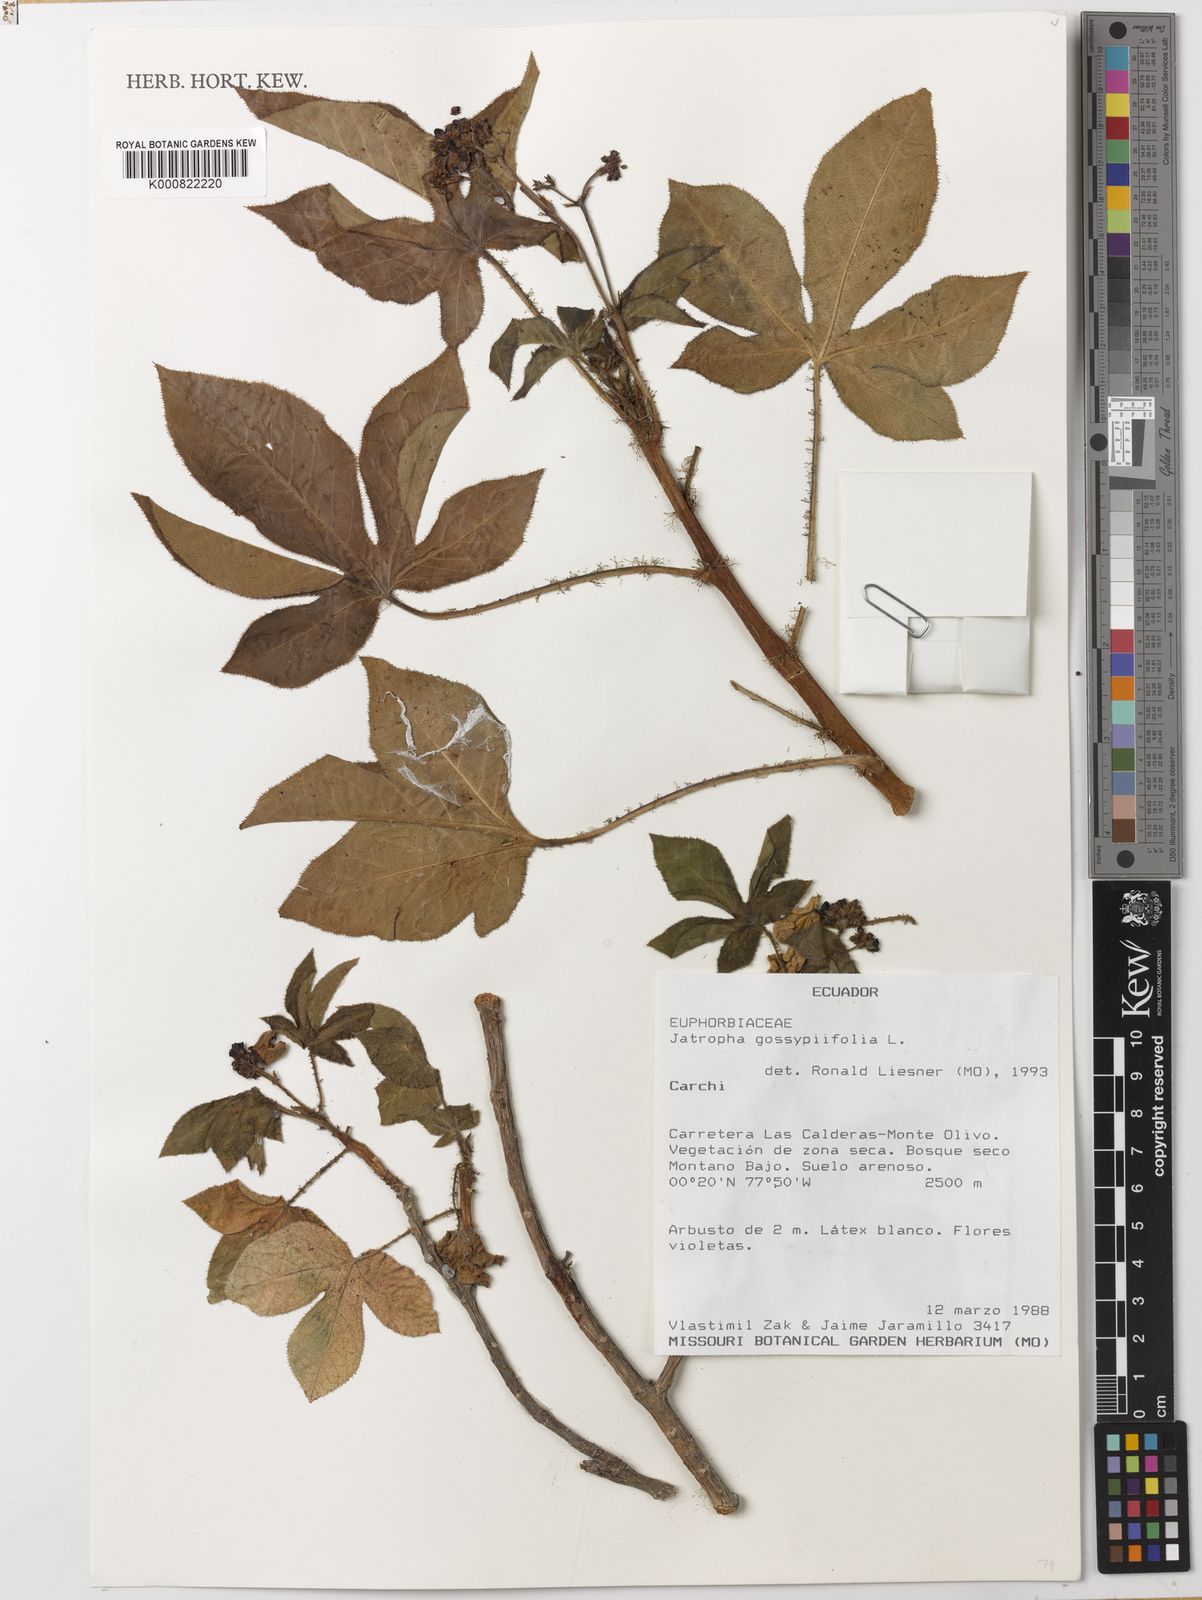 Jatropha gossypiifolia – Wikipédia, a enciclopédia livre